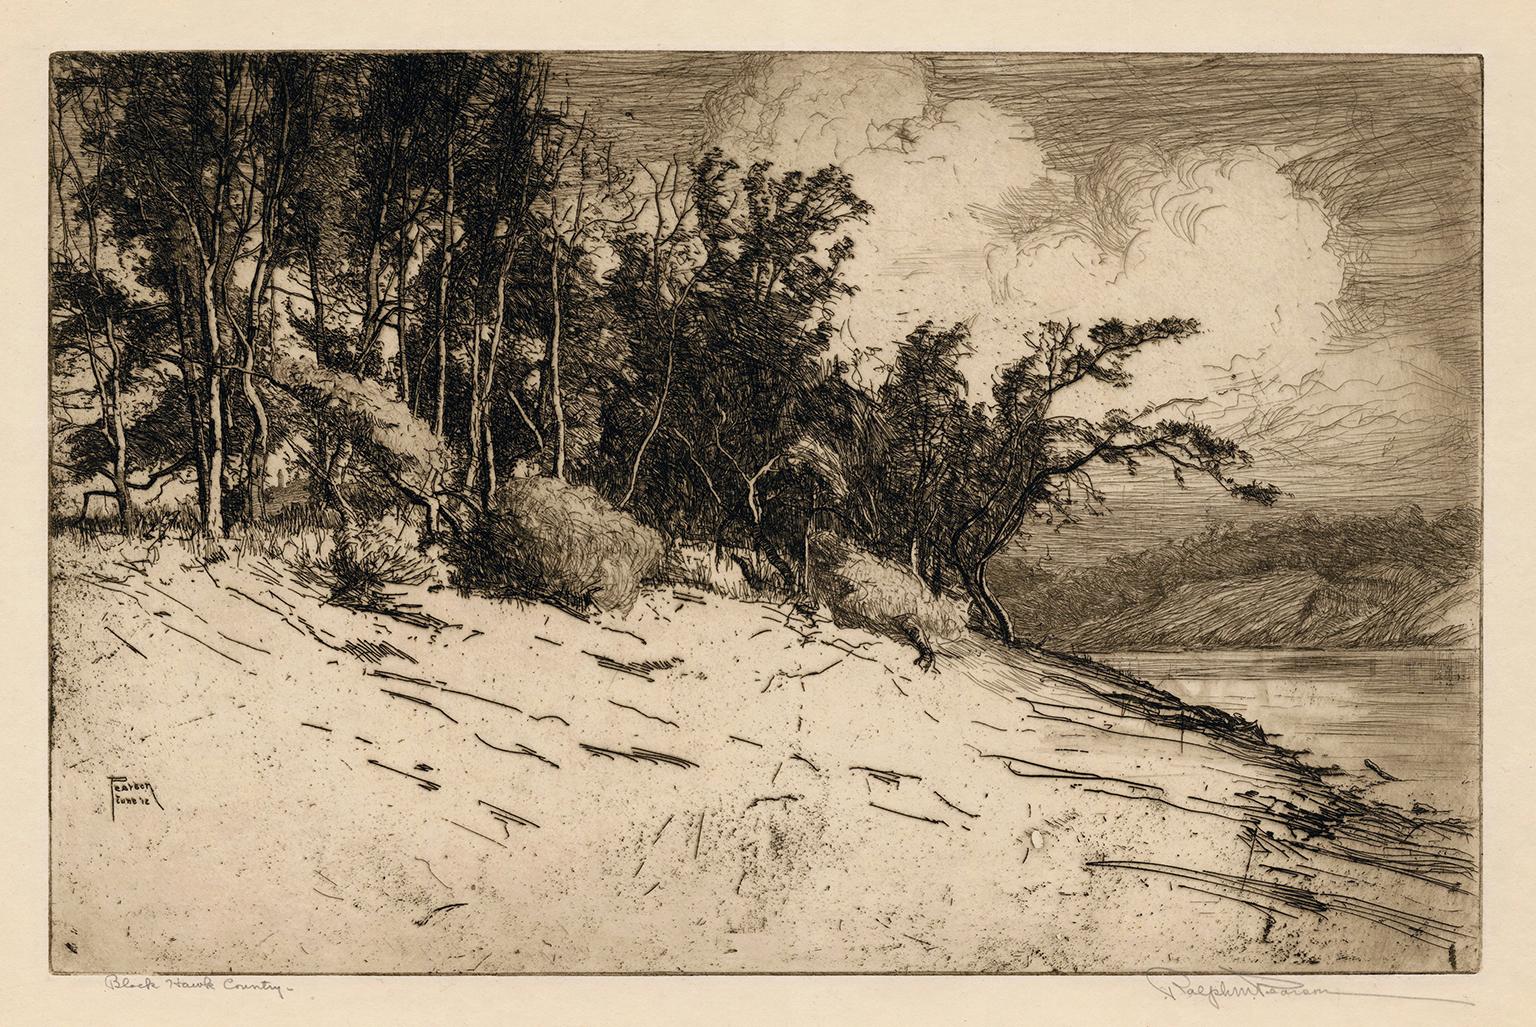 Ralph M. Pearson Landscape Print - 'Black Hawk Country' — Early 20th-Century American Impressionism